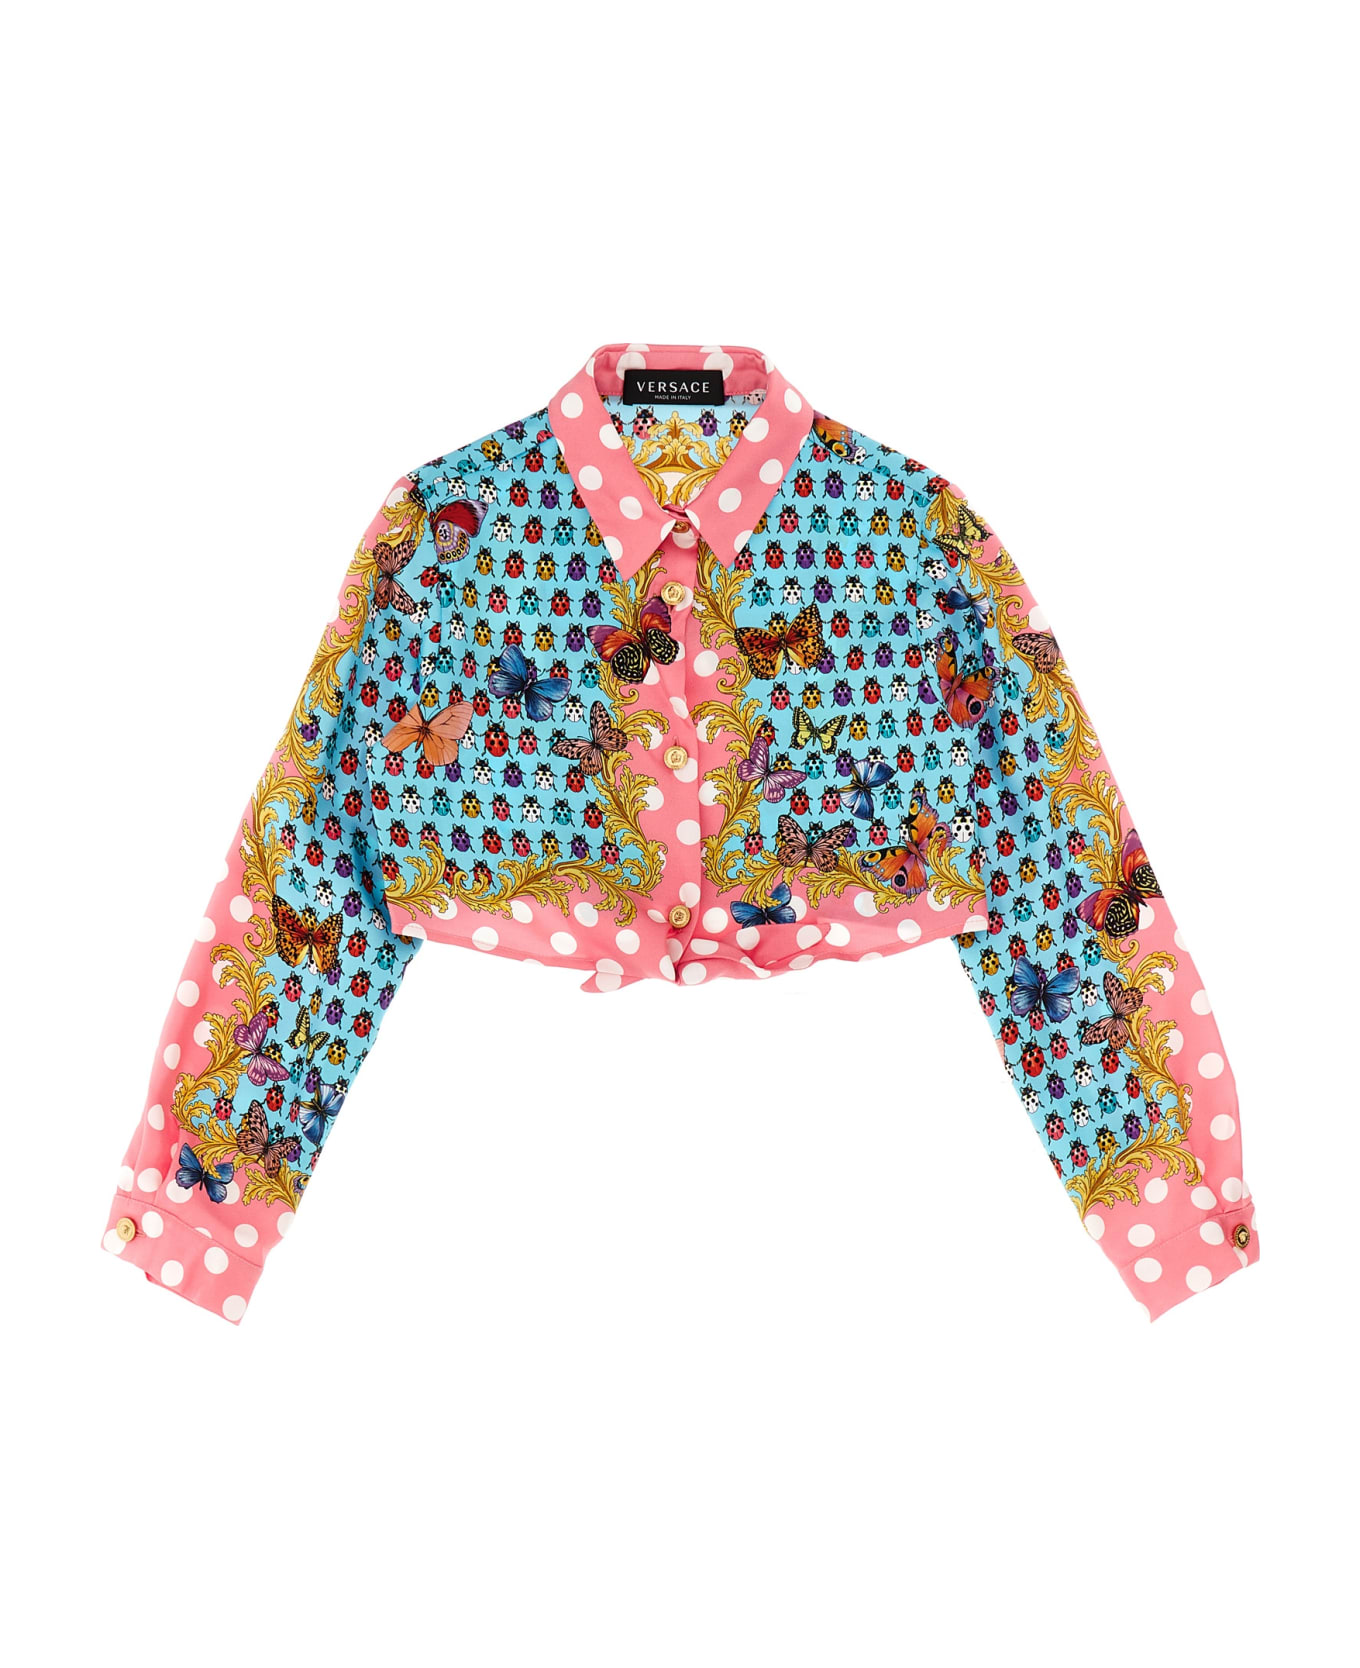 Versace Heritage Butterflies & Ladybugs Kids' La Vacanza Capsule Shirt - Multicolor